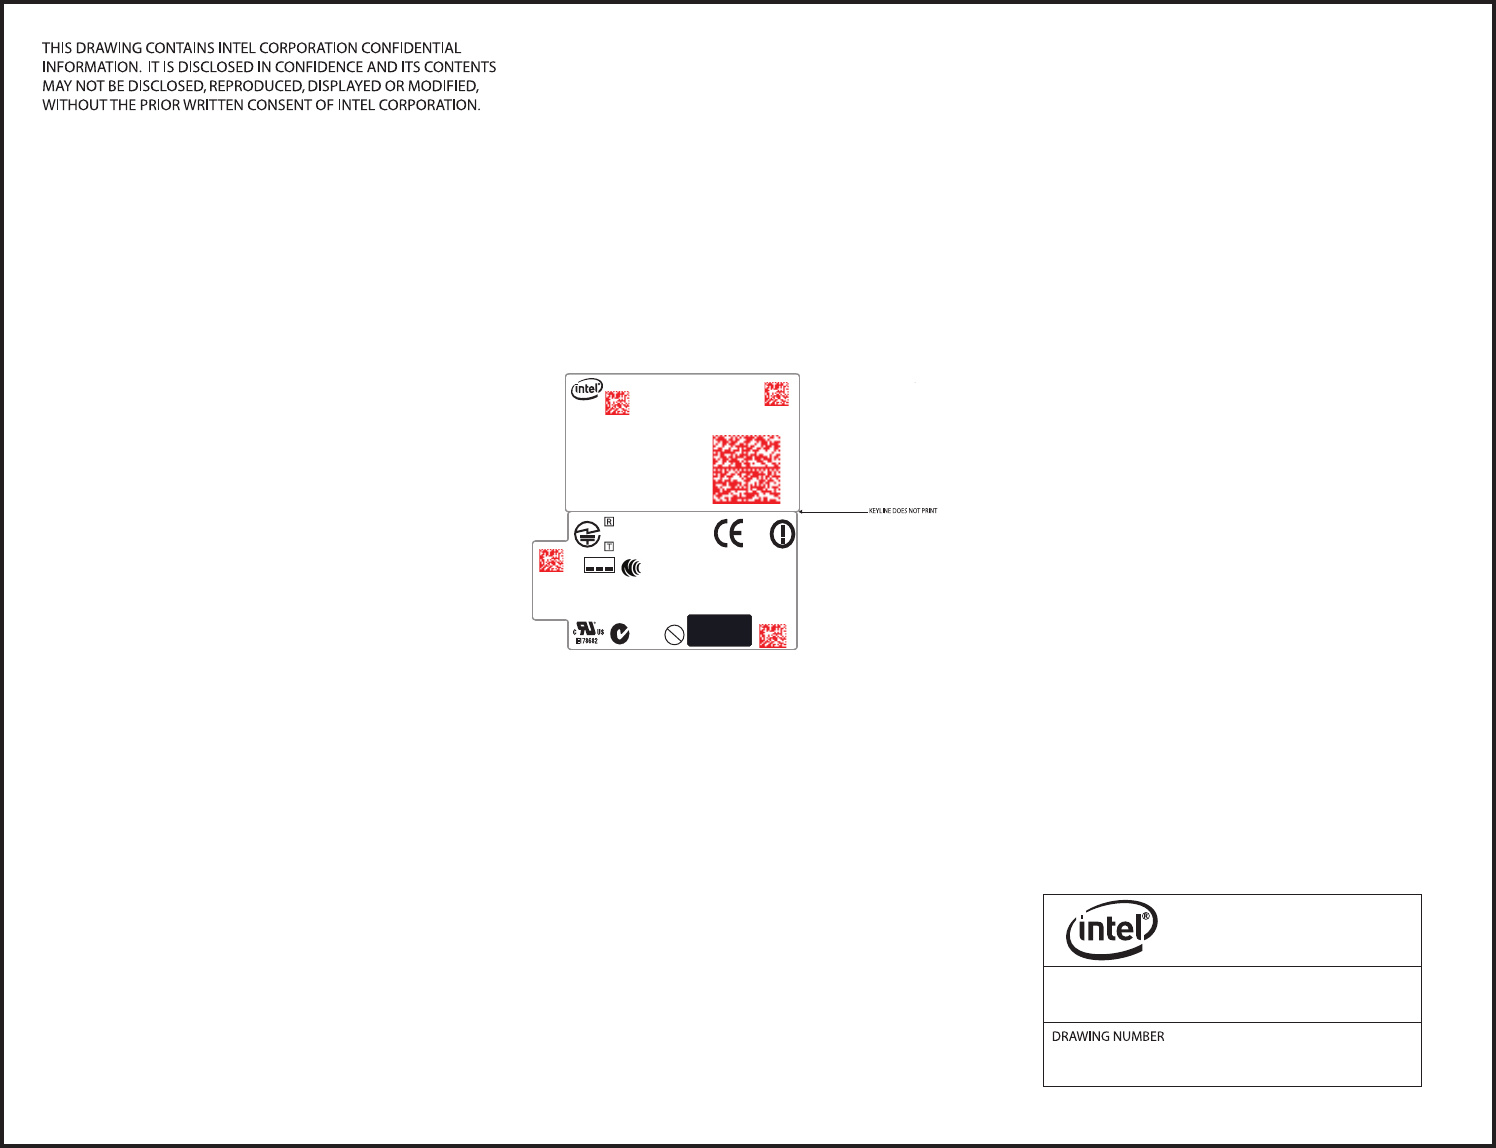 Intel wifi link 5100 model 512an mmw drivers for mac